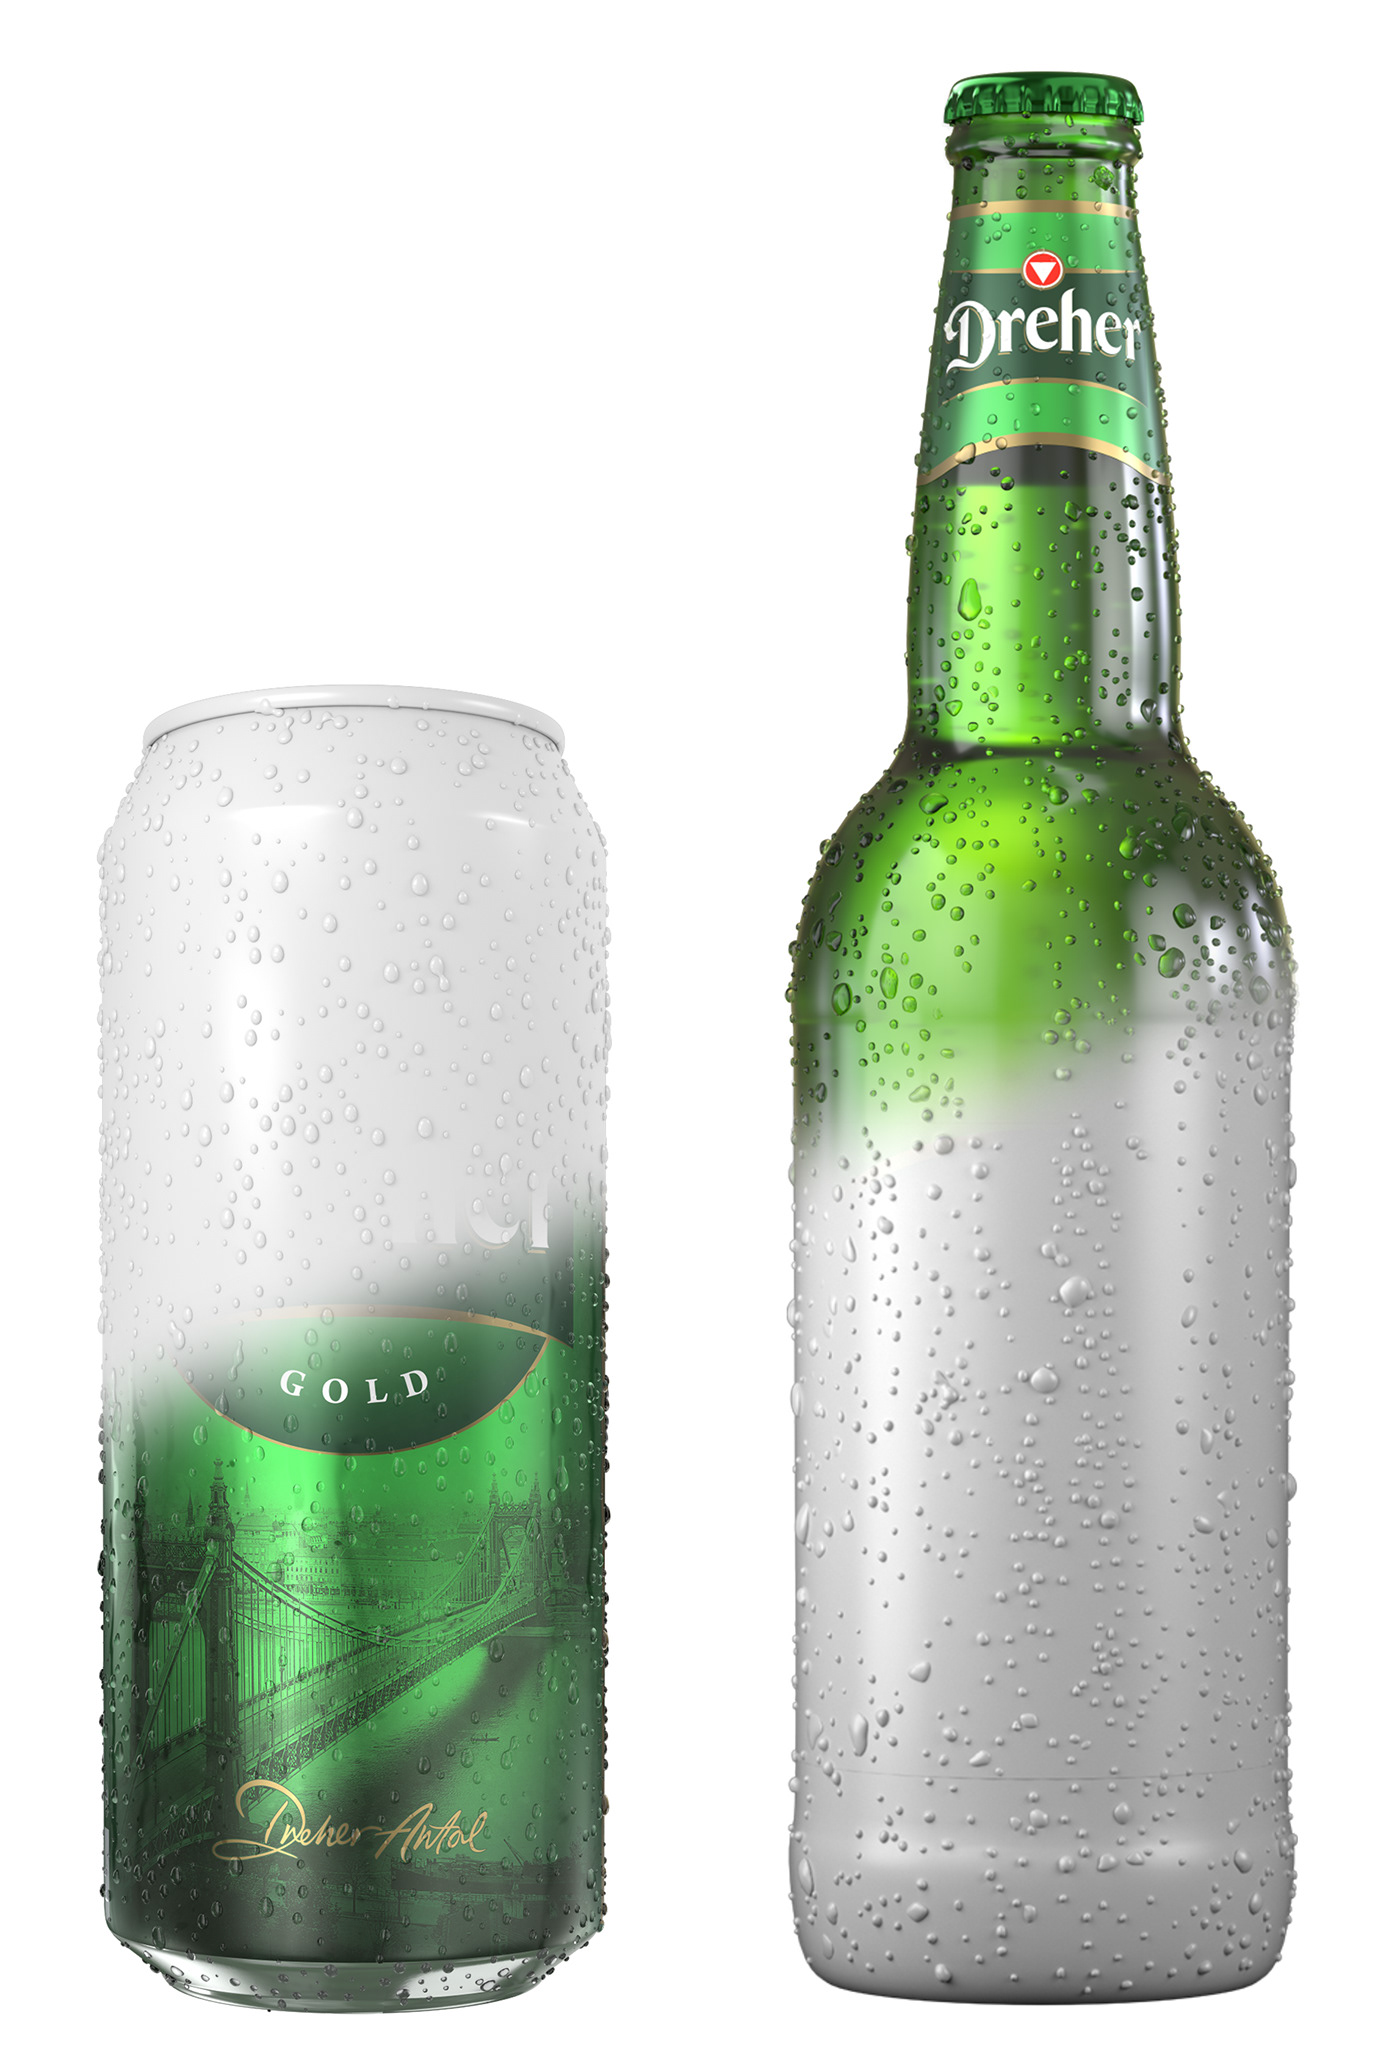 3D beer bottle commercial dreher lighting product Render studio visualization